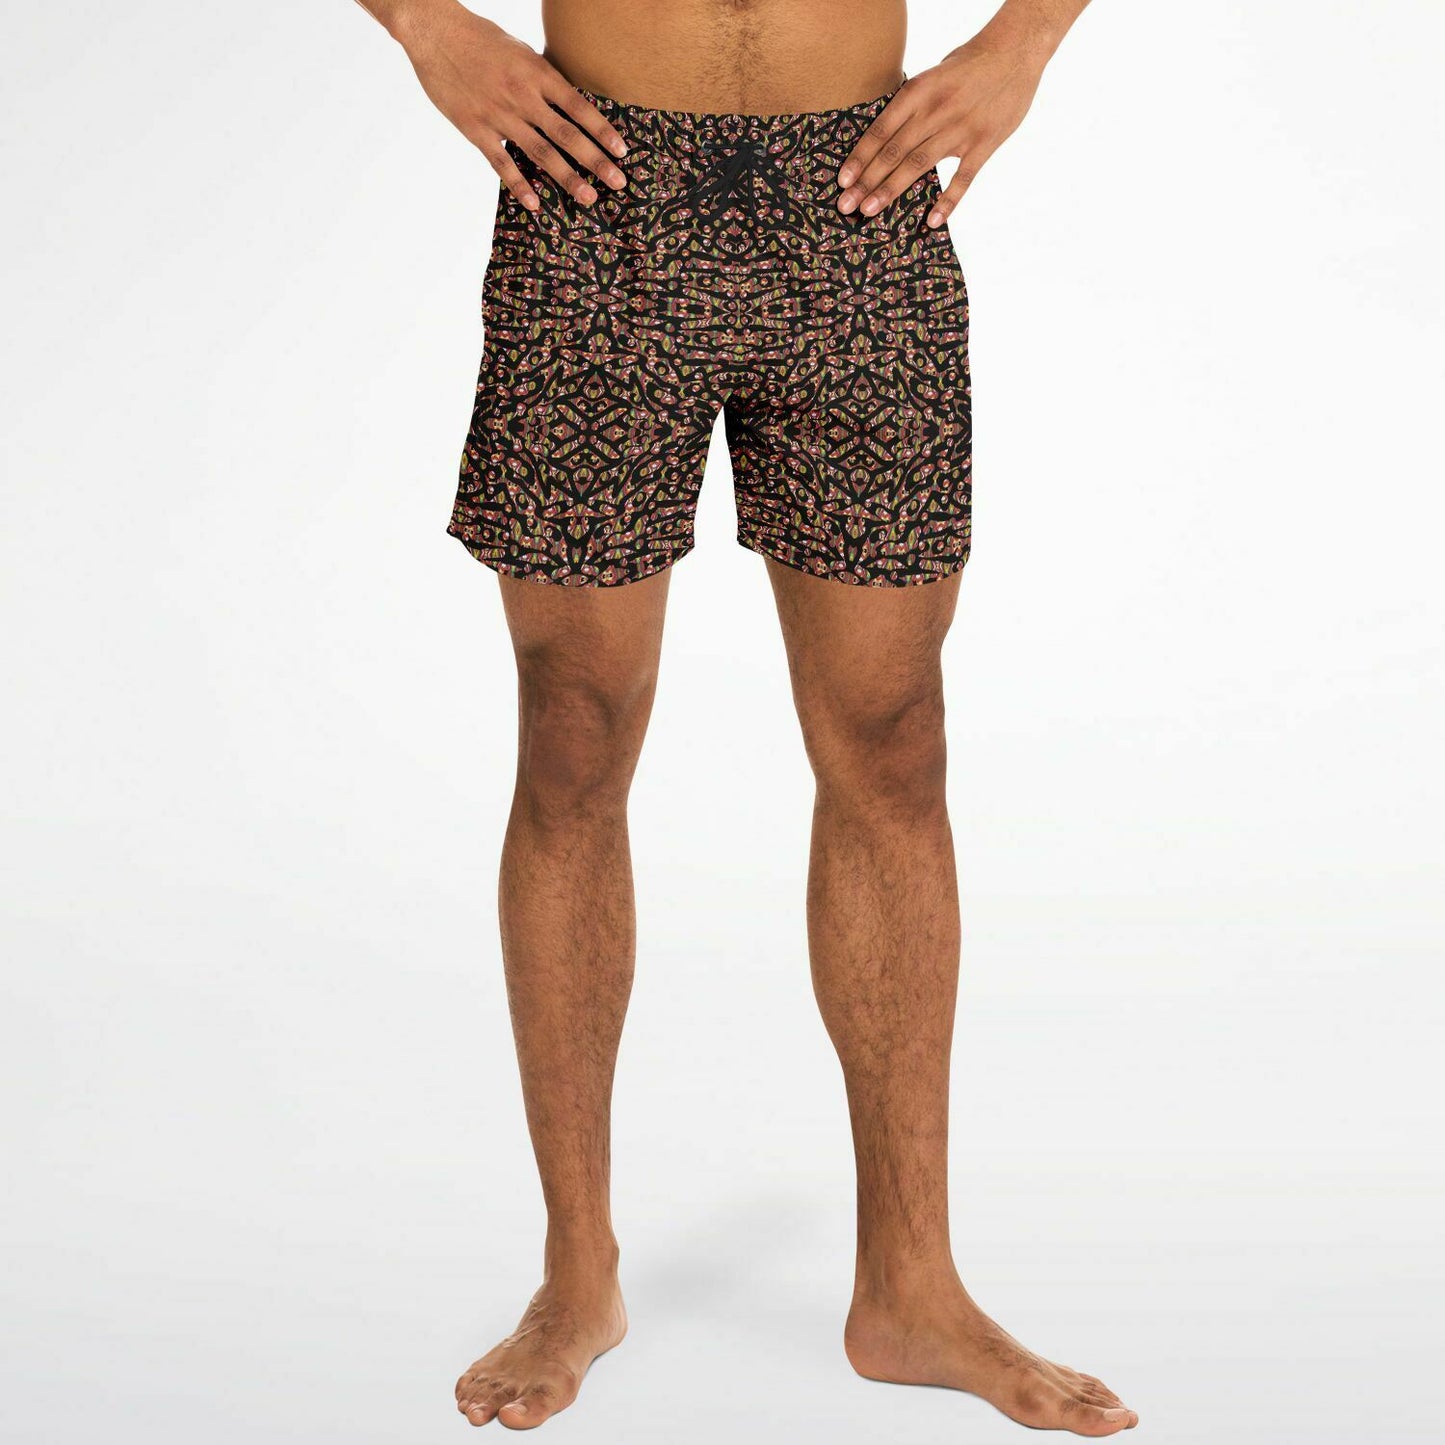 Designer swim shorts with,a black and multi colored print